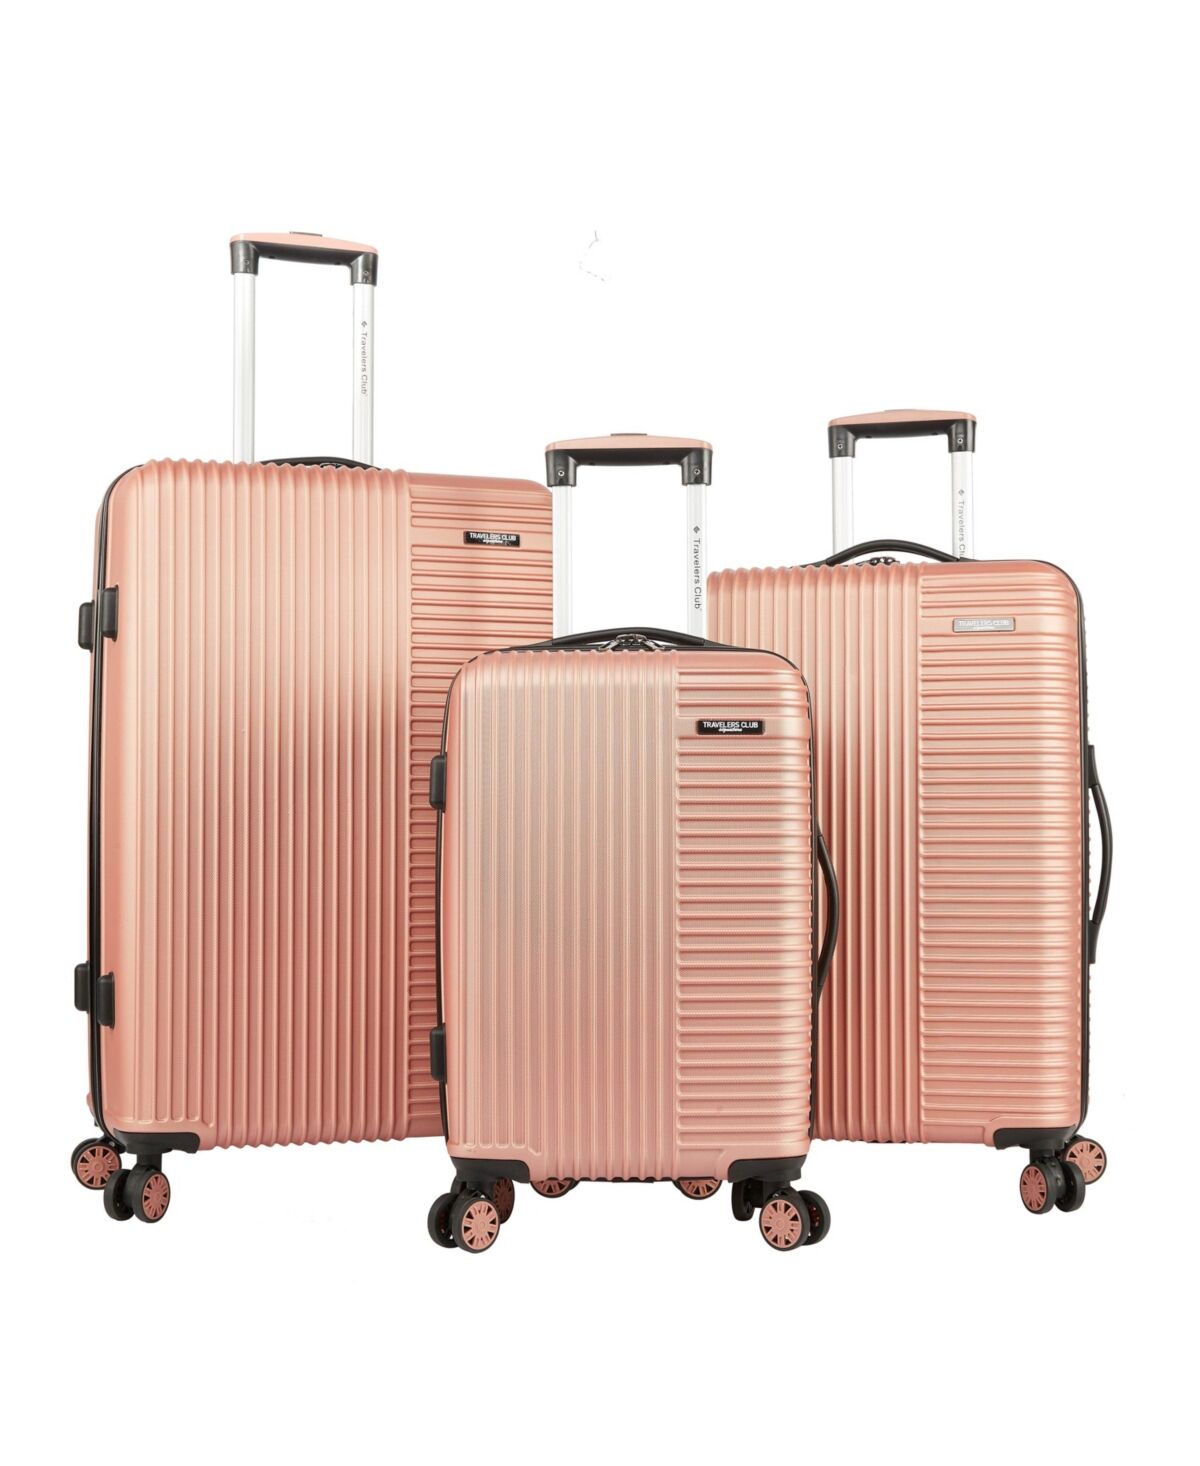 Travelers Club Basette 3-Pc. Hardside Luggage Set, Created for Macy's - Rose Gold